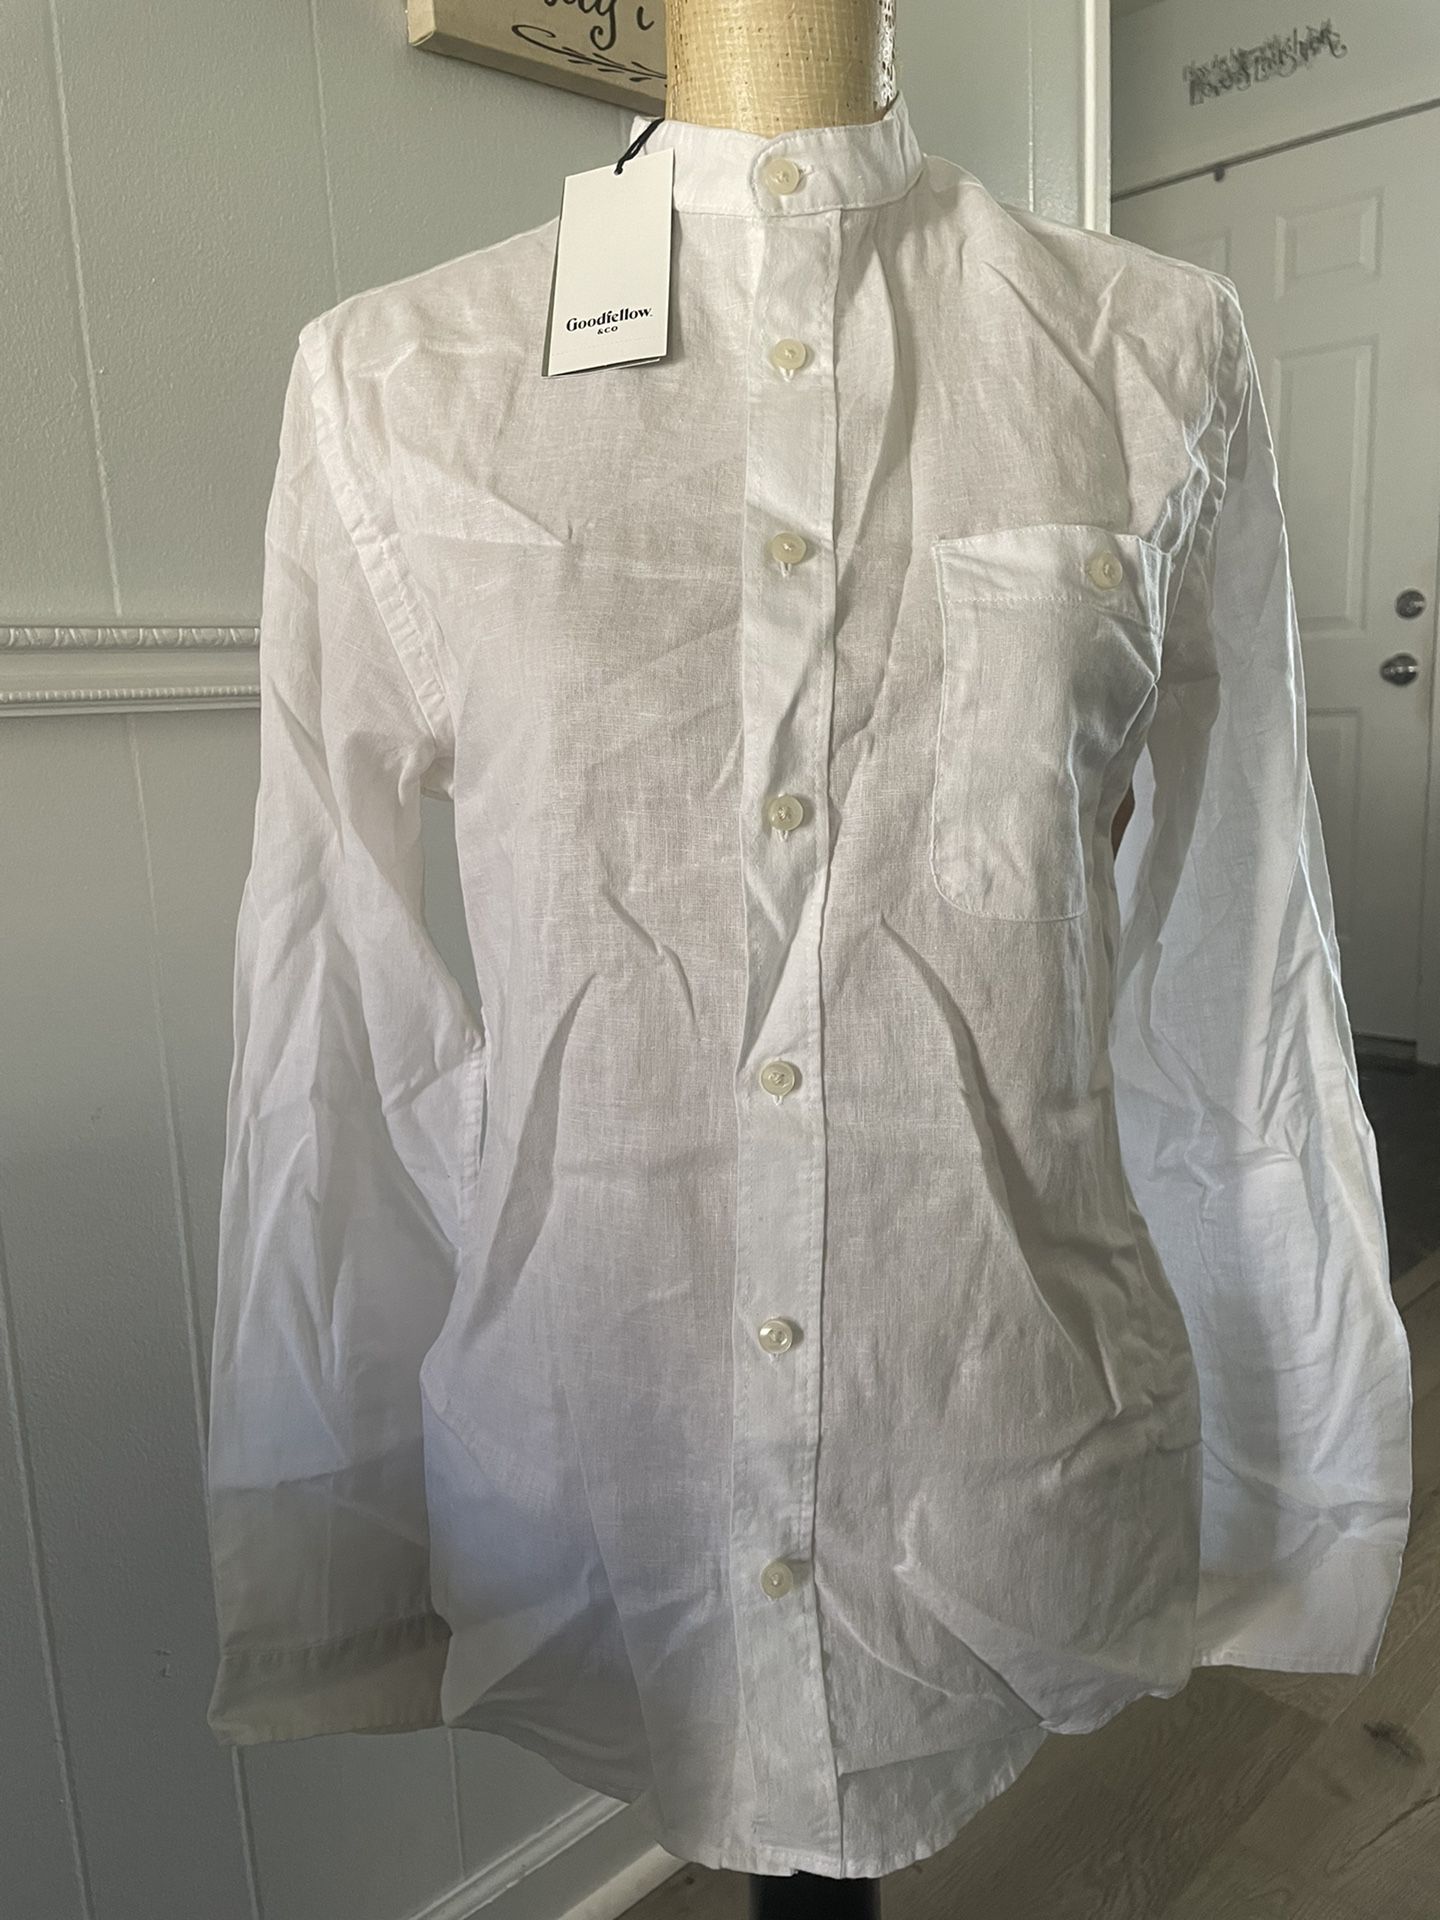 NWT Mens Linen Cotton Goodiellow Button Down Shirt White